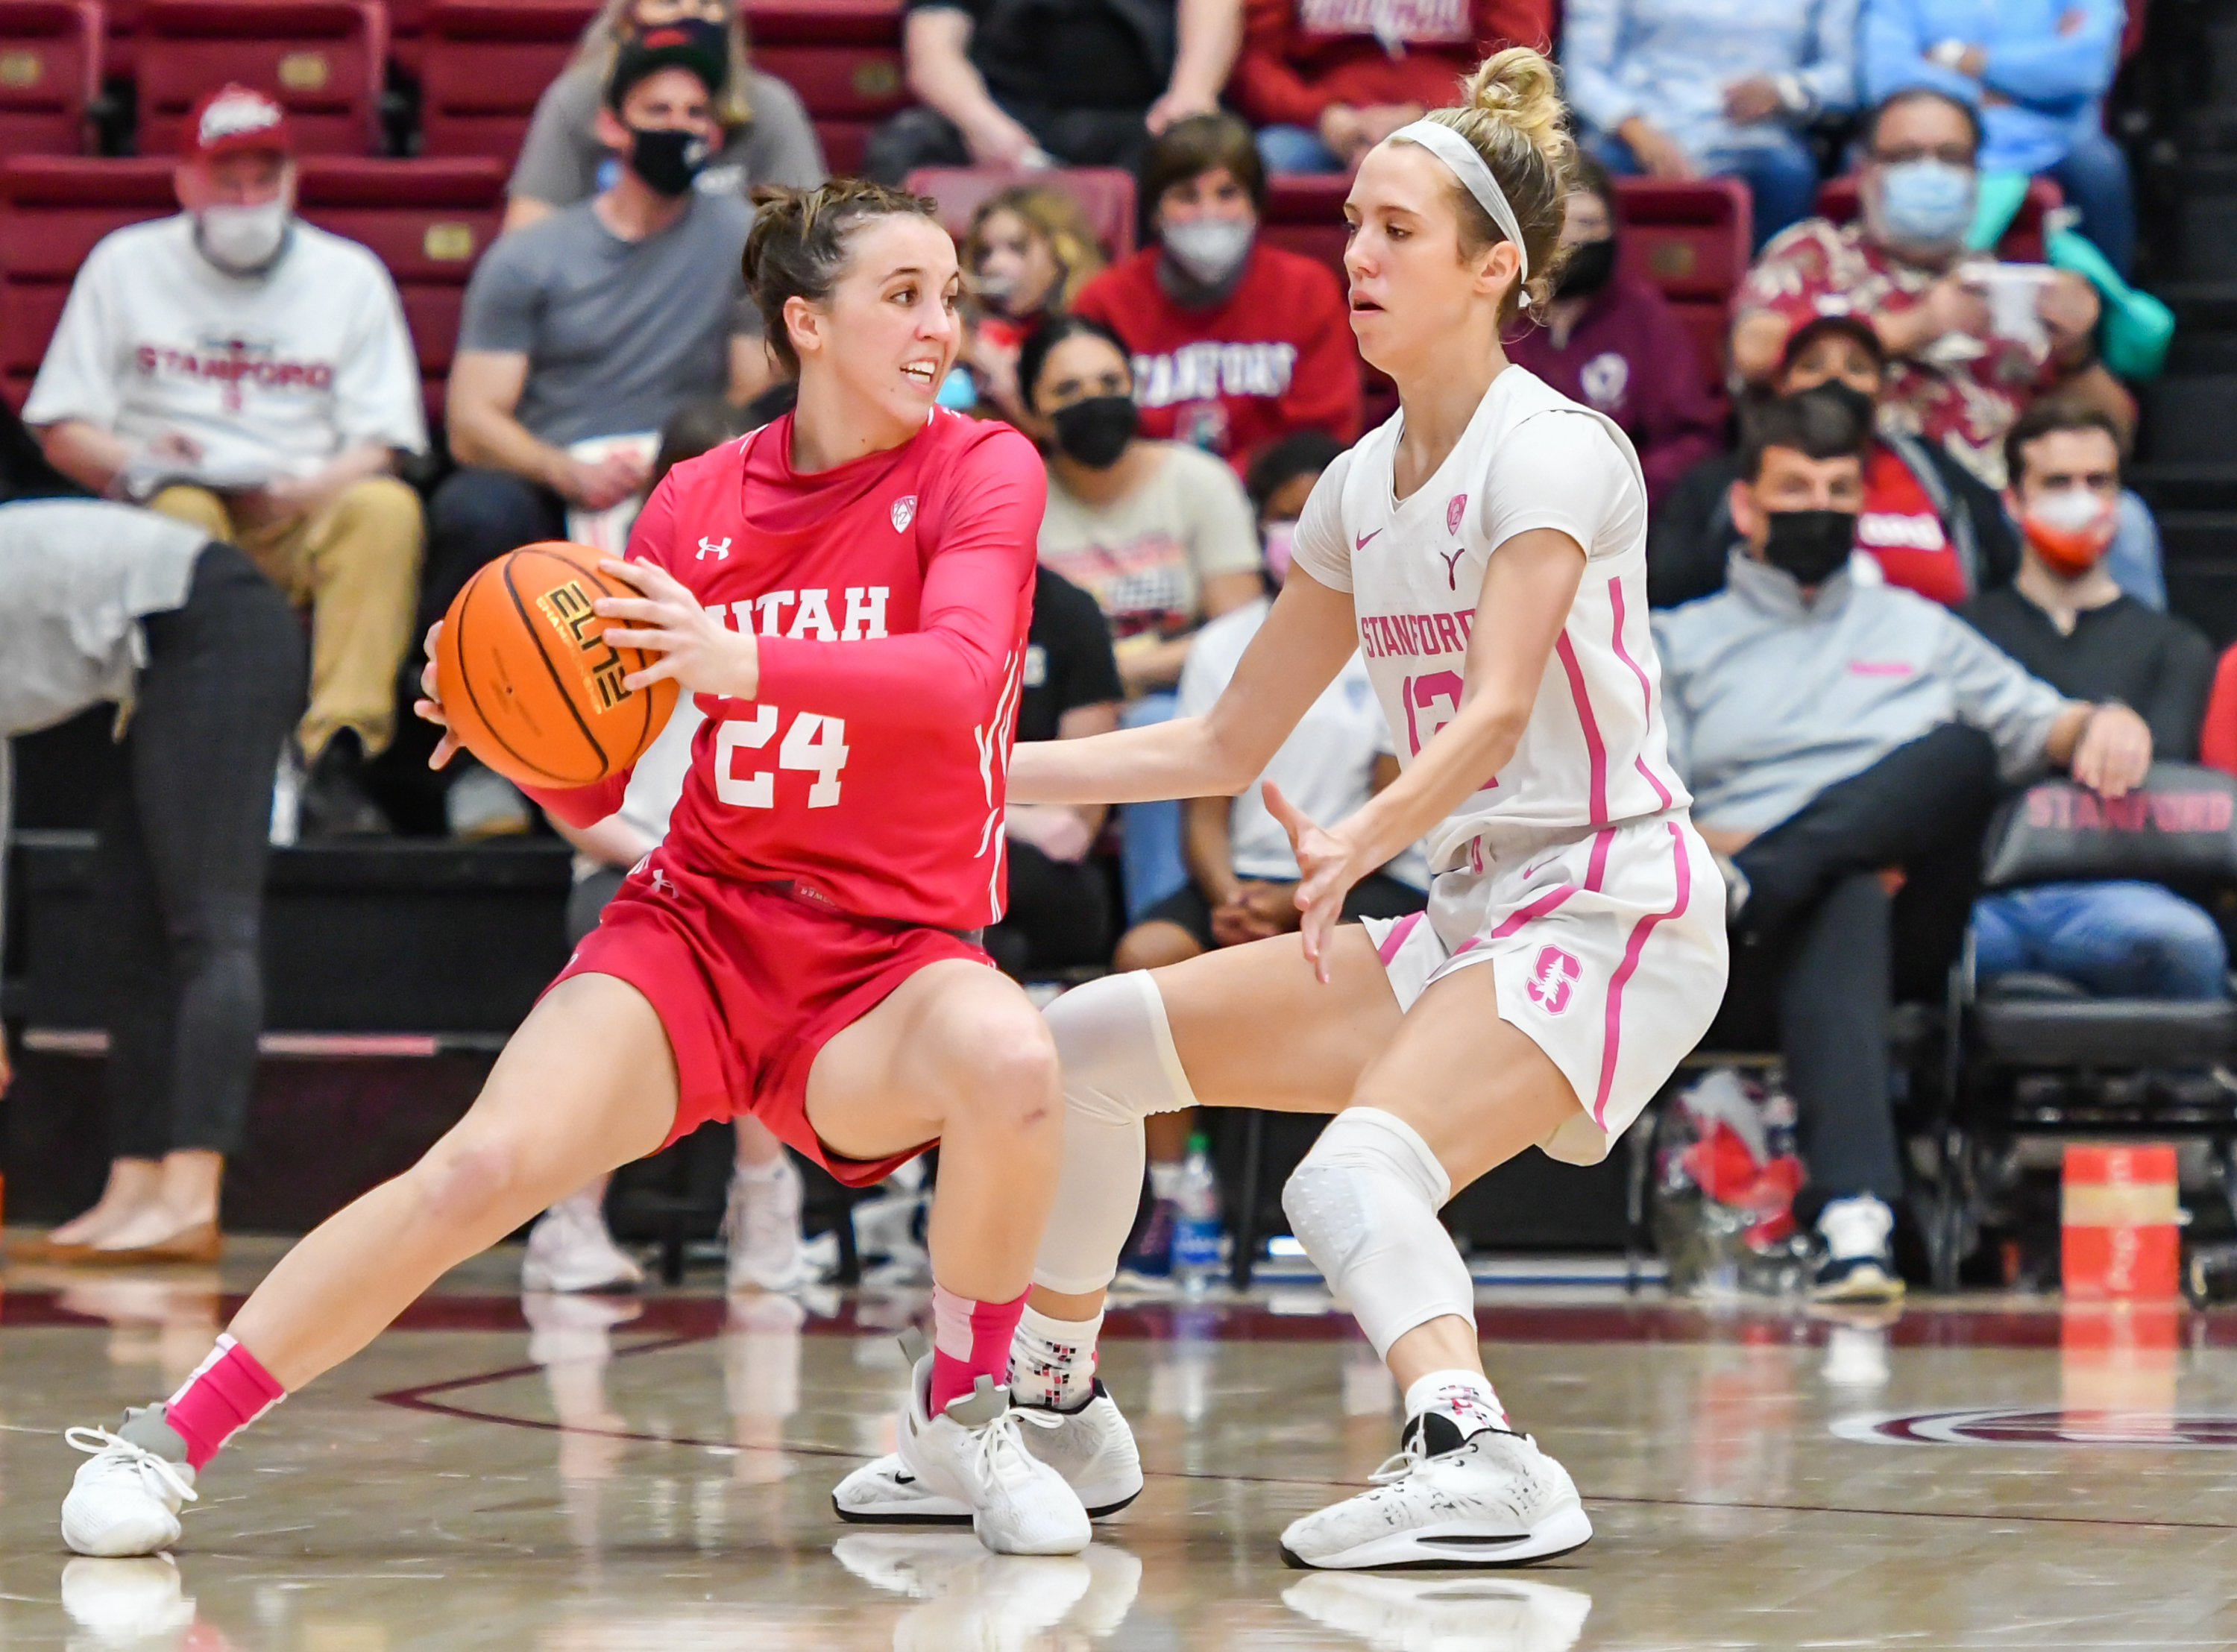 COLLEGE BASKETBALL: FEB 11 Women’s - Utah at Stanford